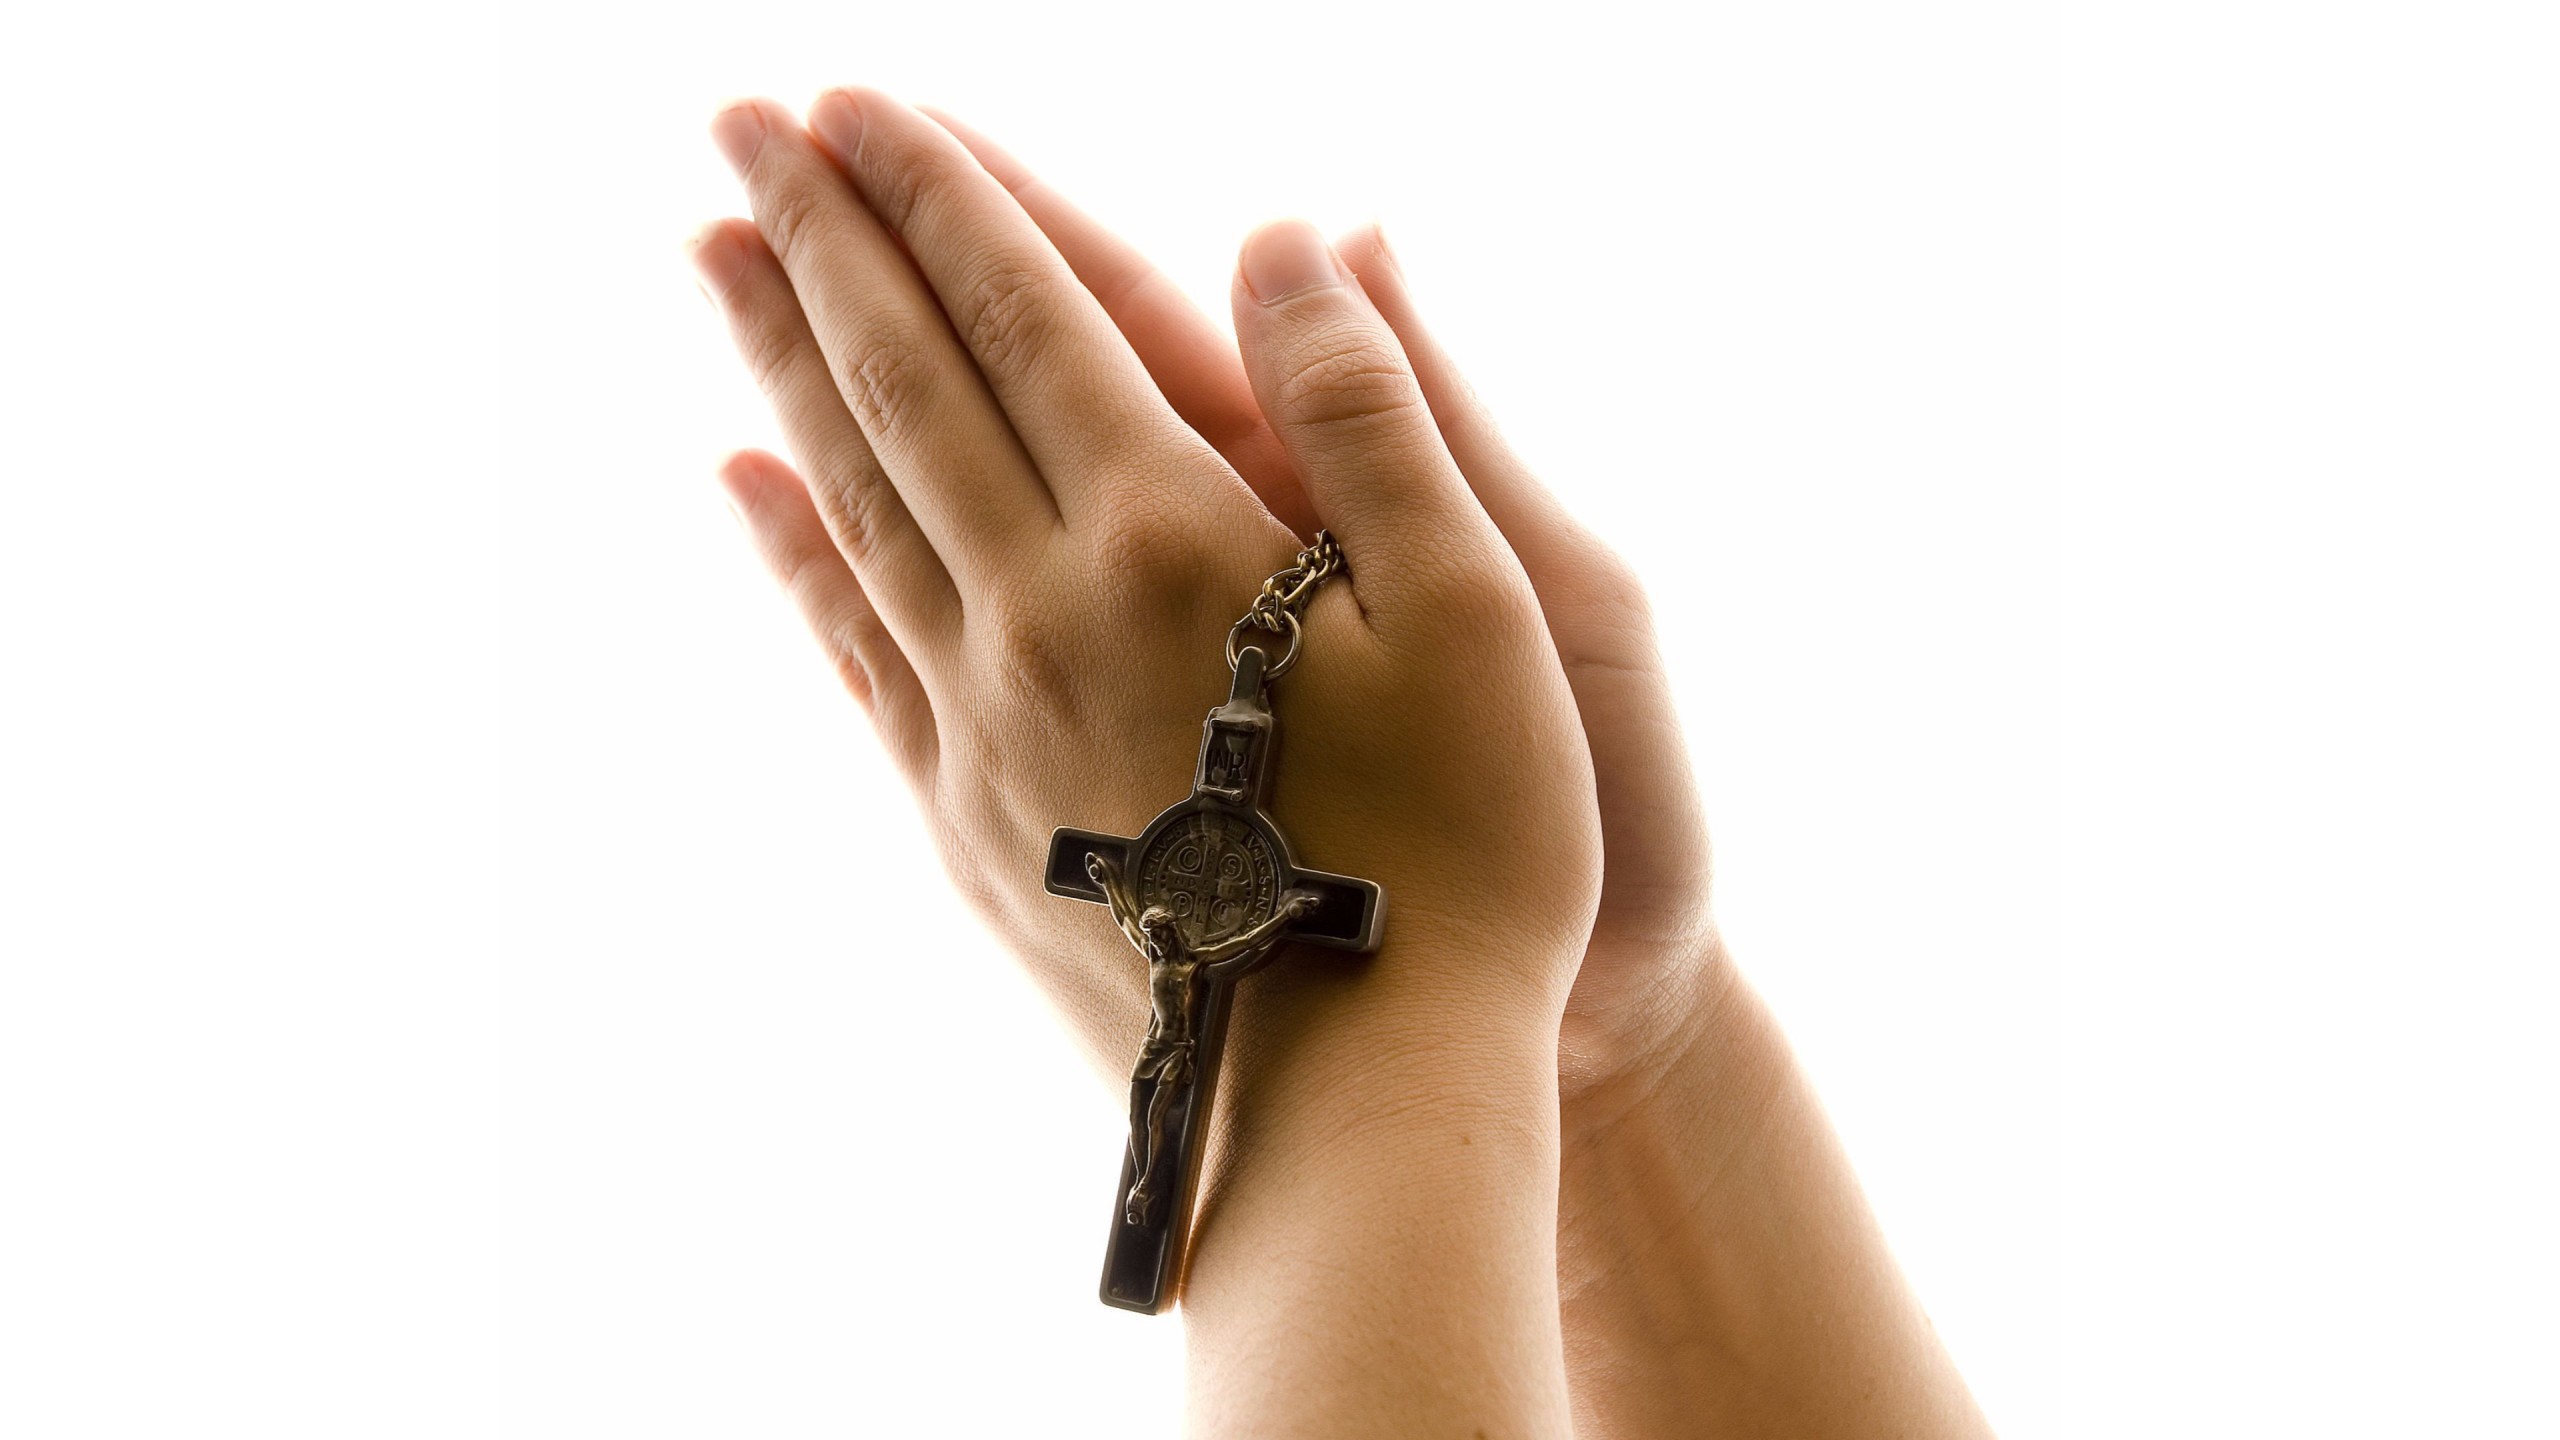 Similiar Praying Hands Background Keywords